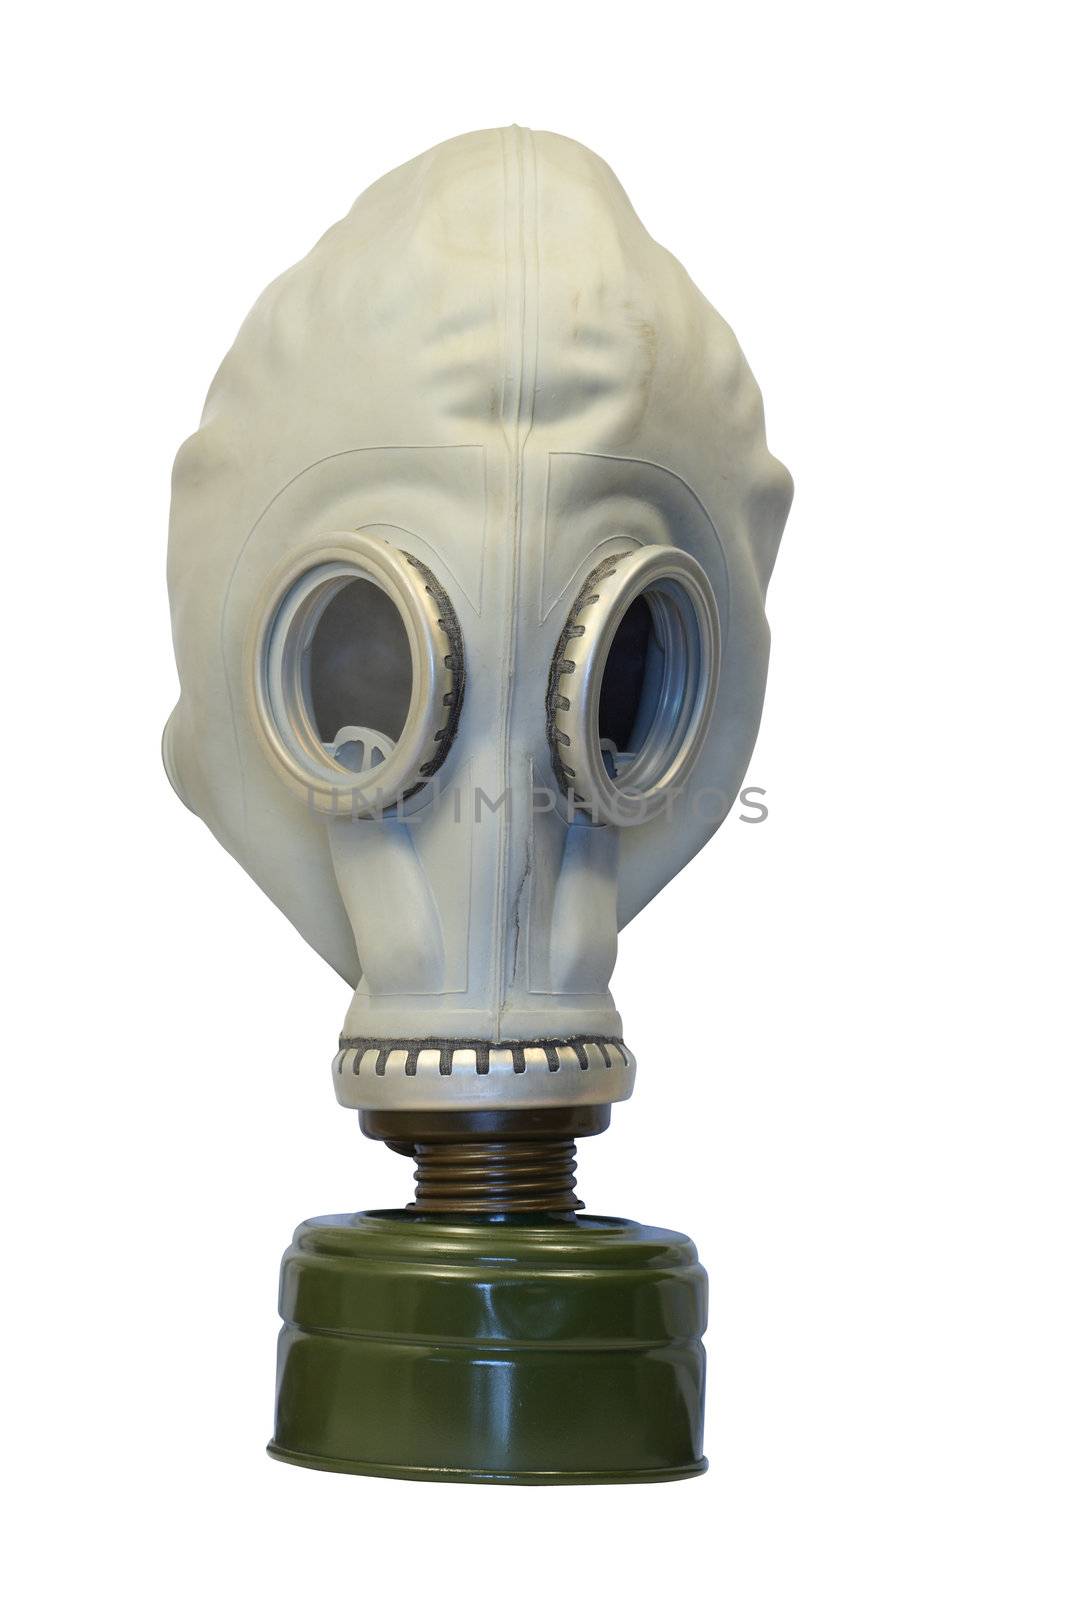 Old Gas Mask by kvkirillov